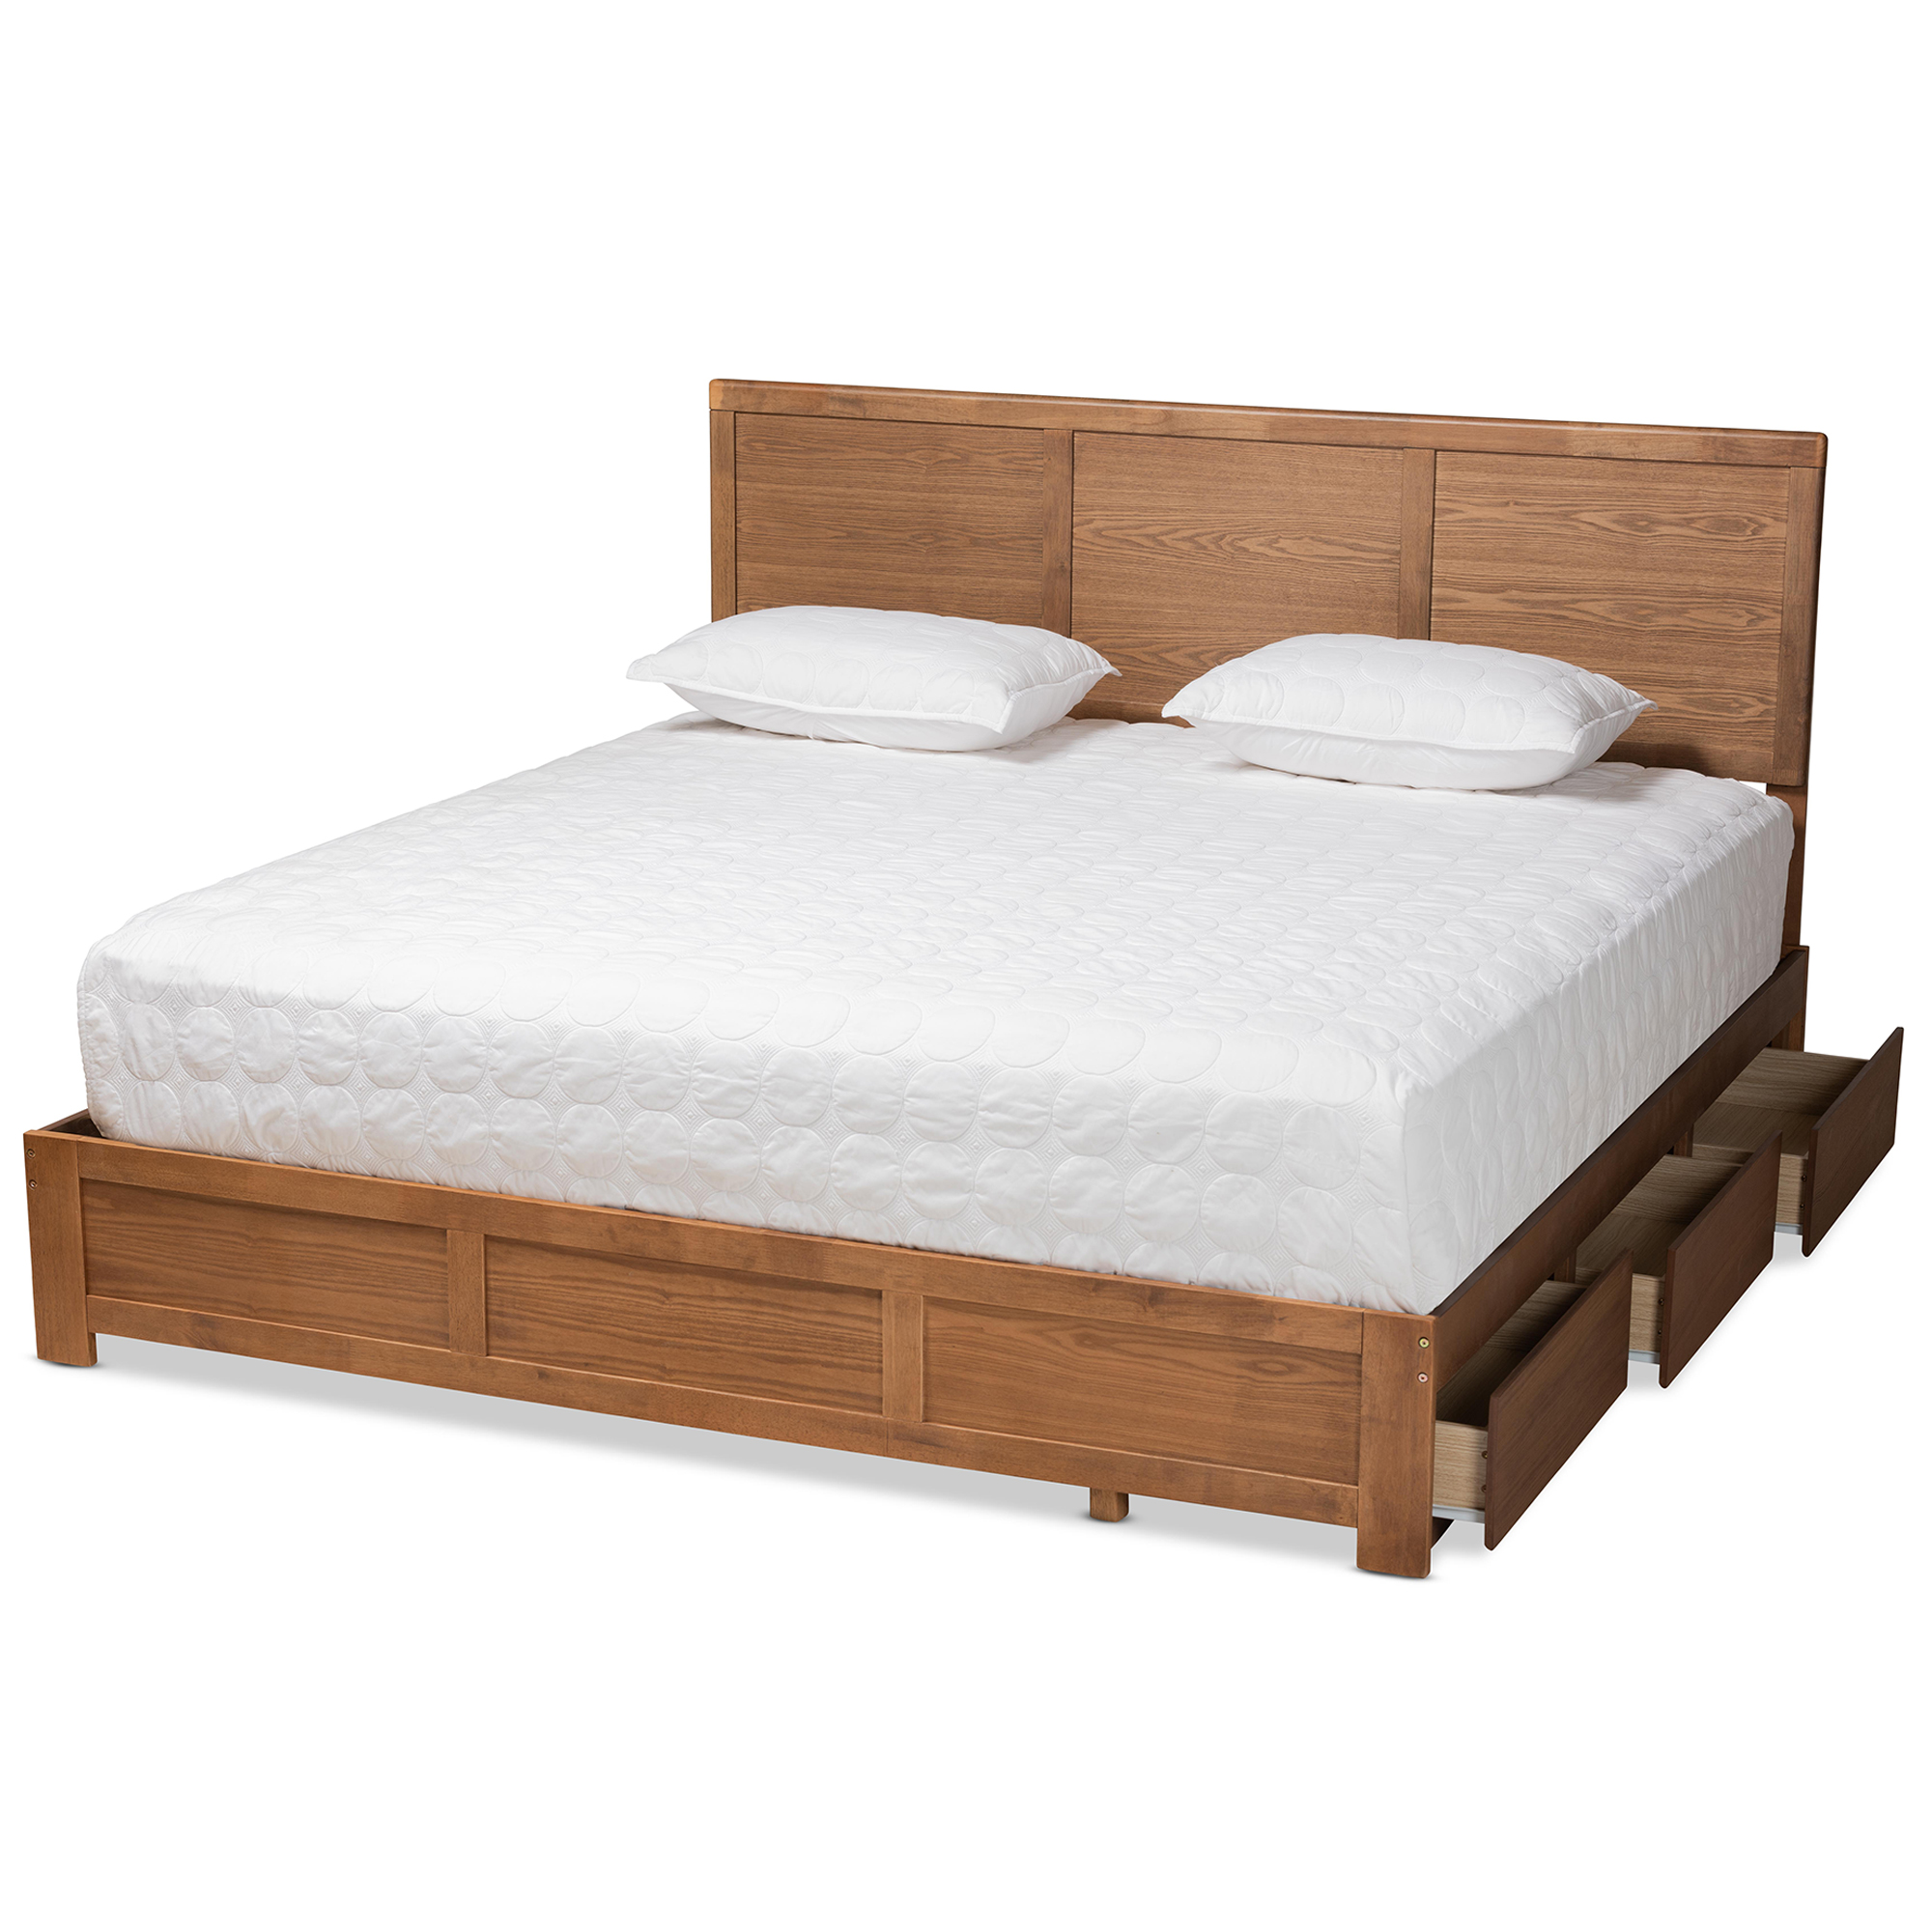 Baxton Studio Aras Contemporary/Modern Wood Storage Platform Bed, King, Ash Walnut - image 3 of 13